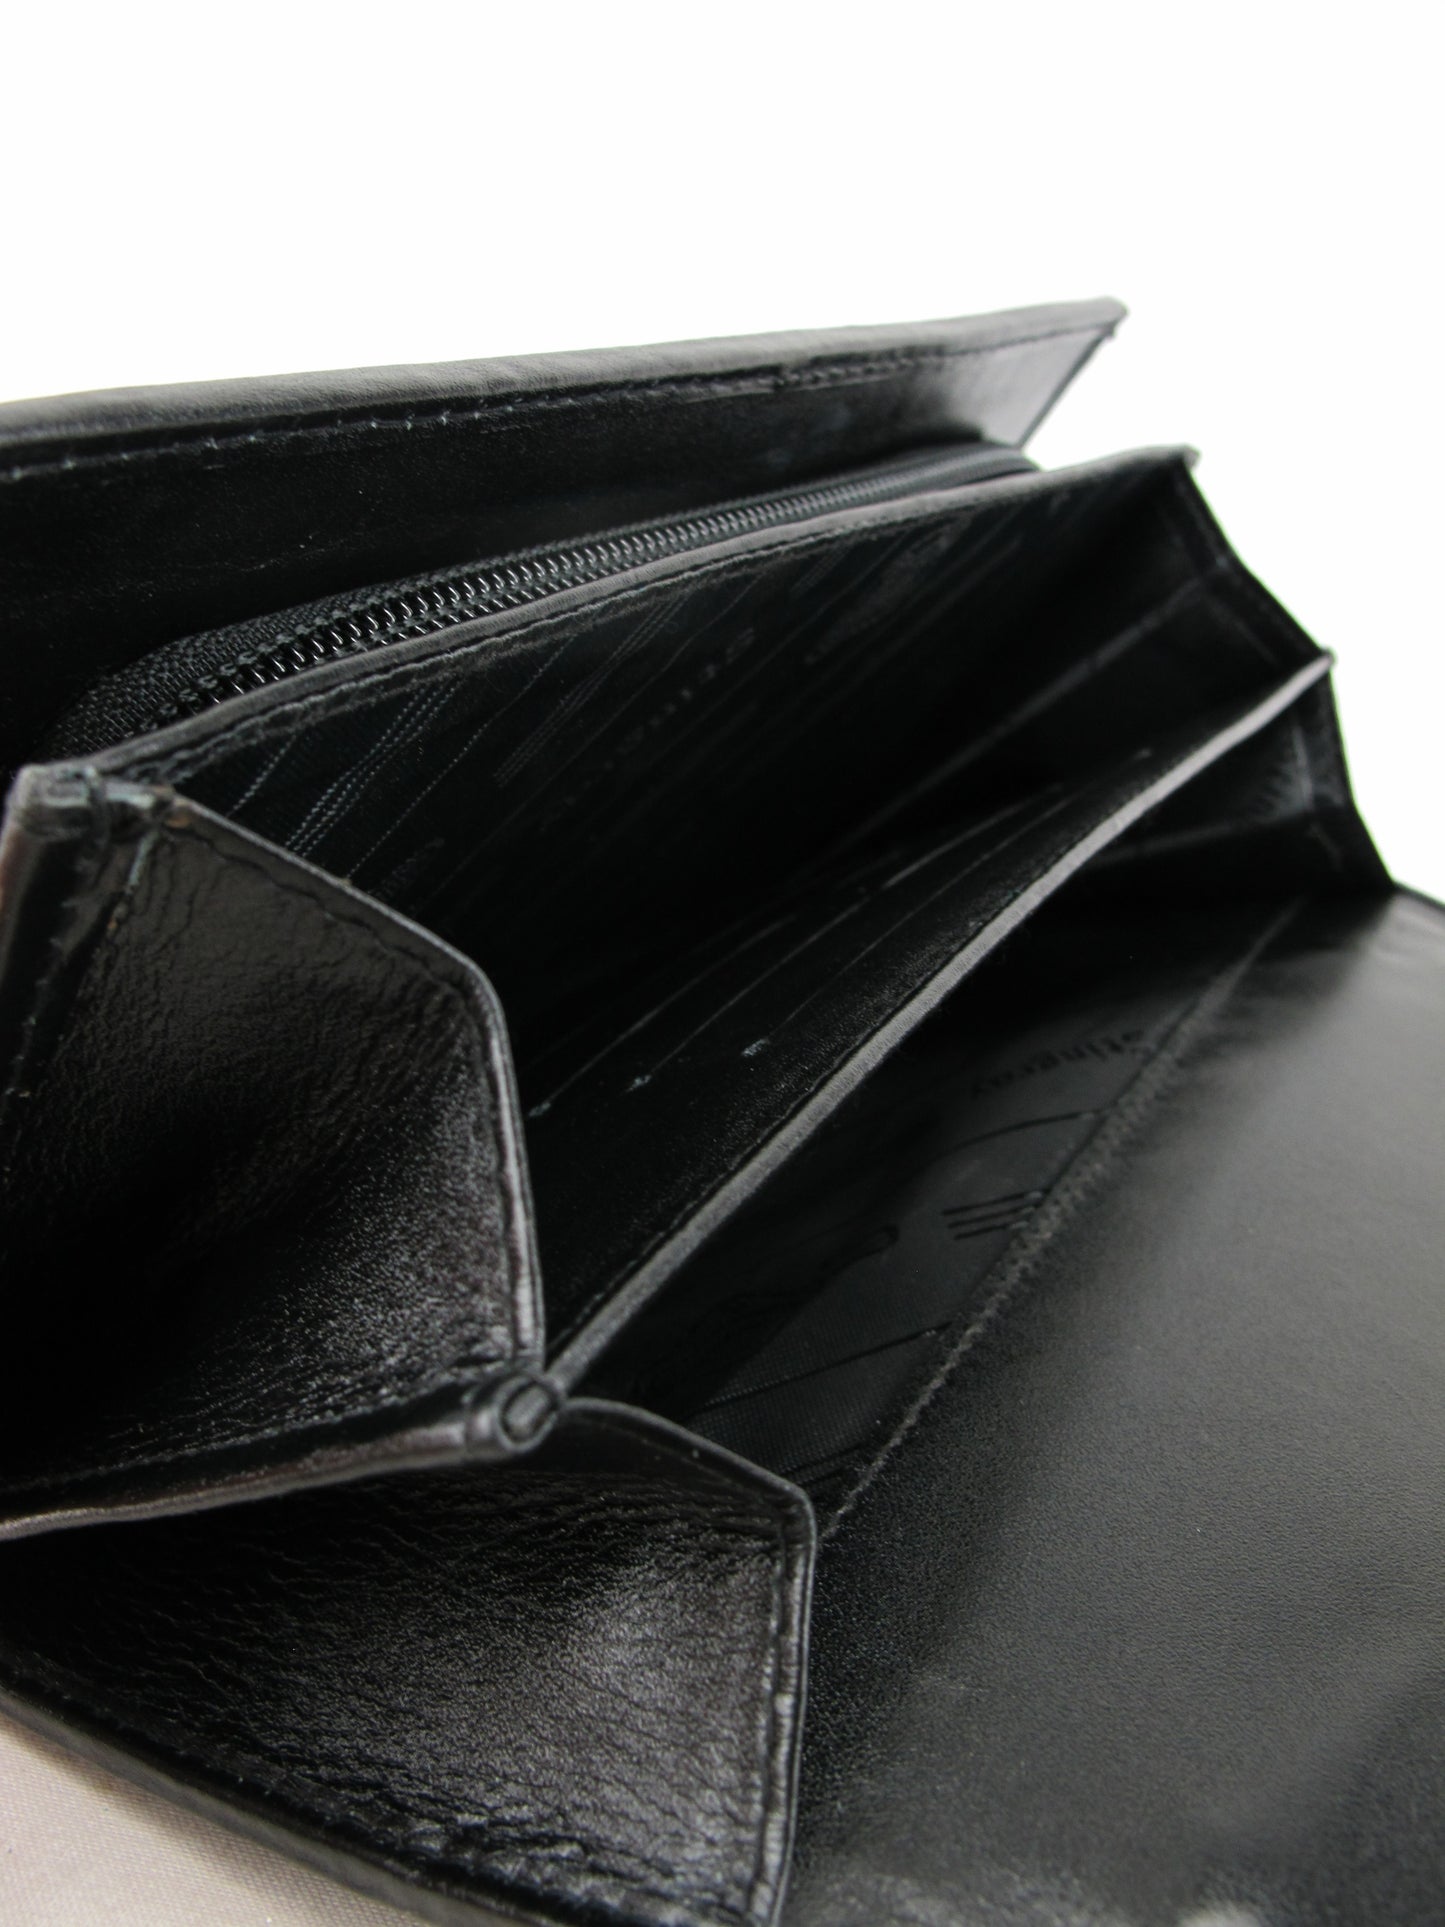 PELGIO Genuine Stingray Skin Leather Women's Clutch & Shoulder Bag